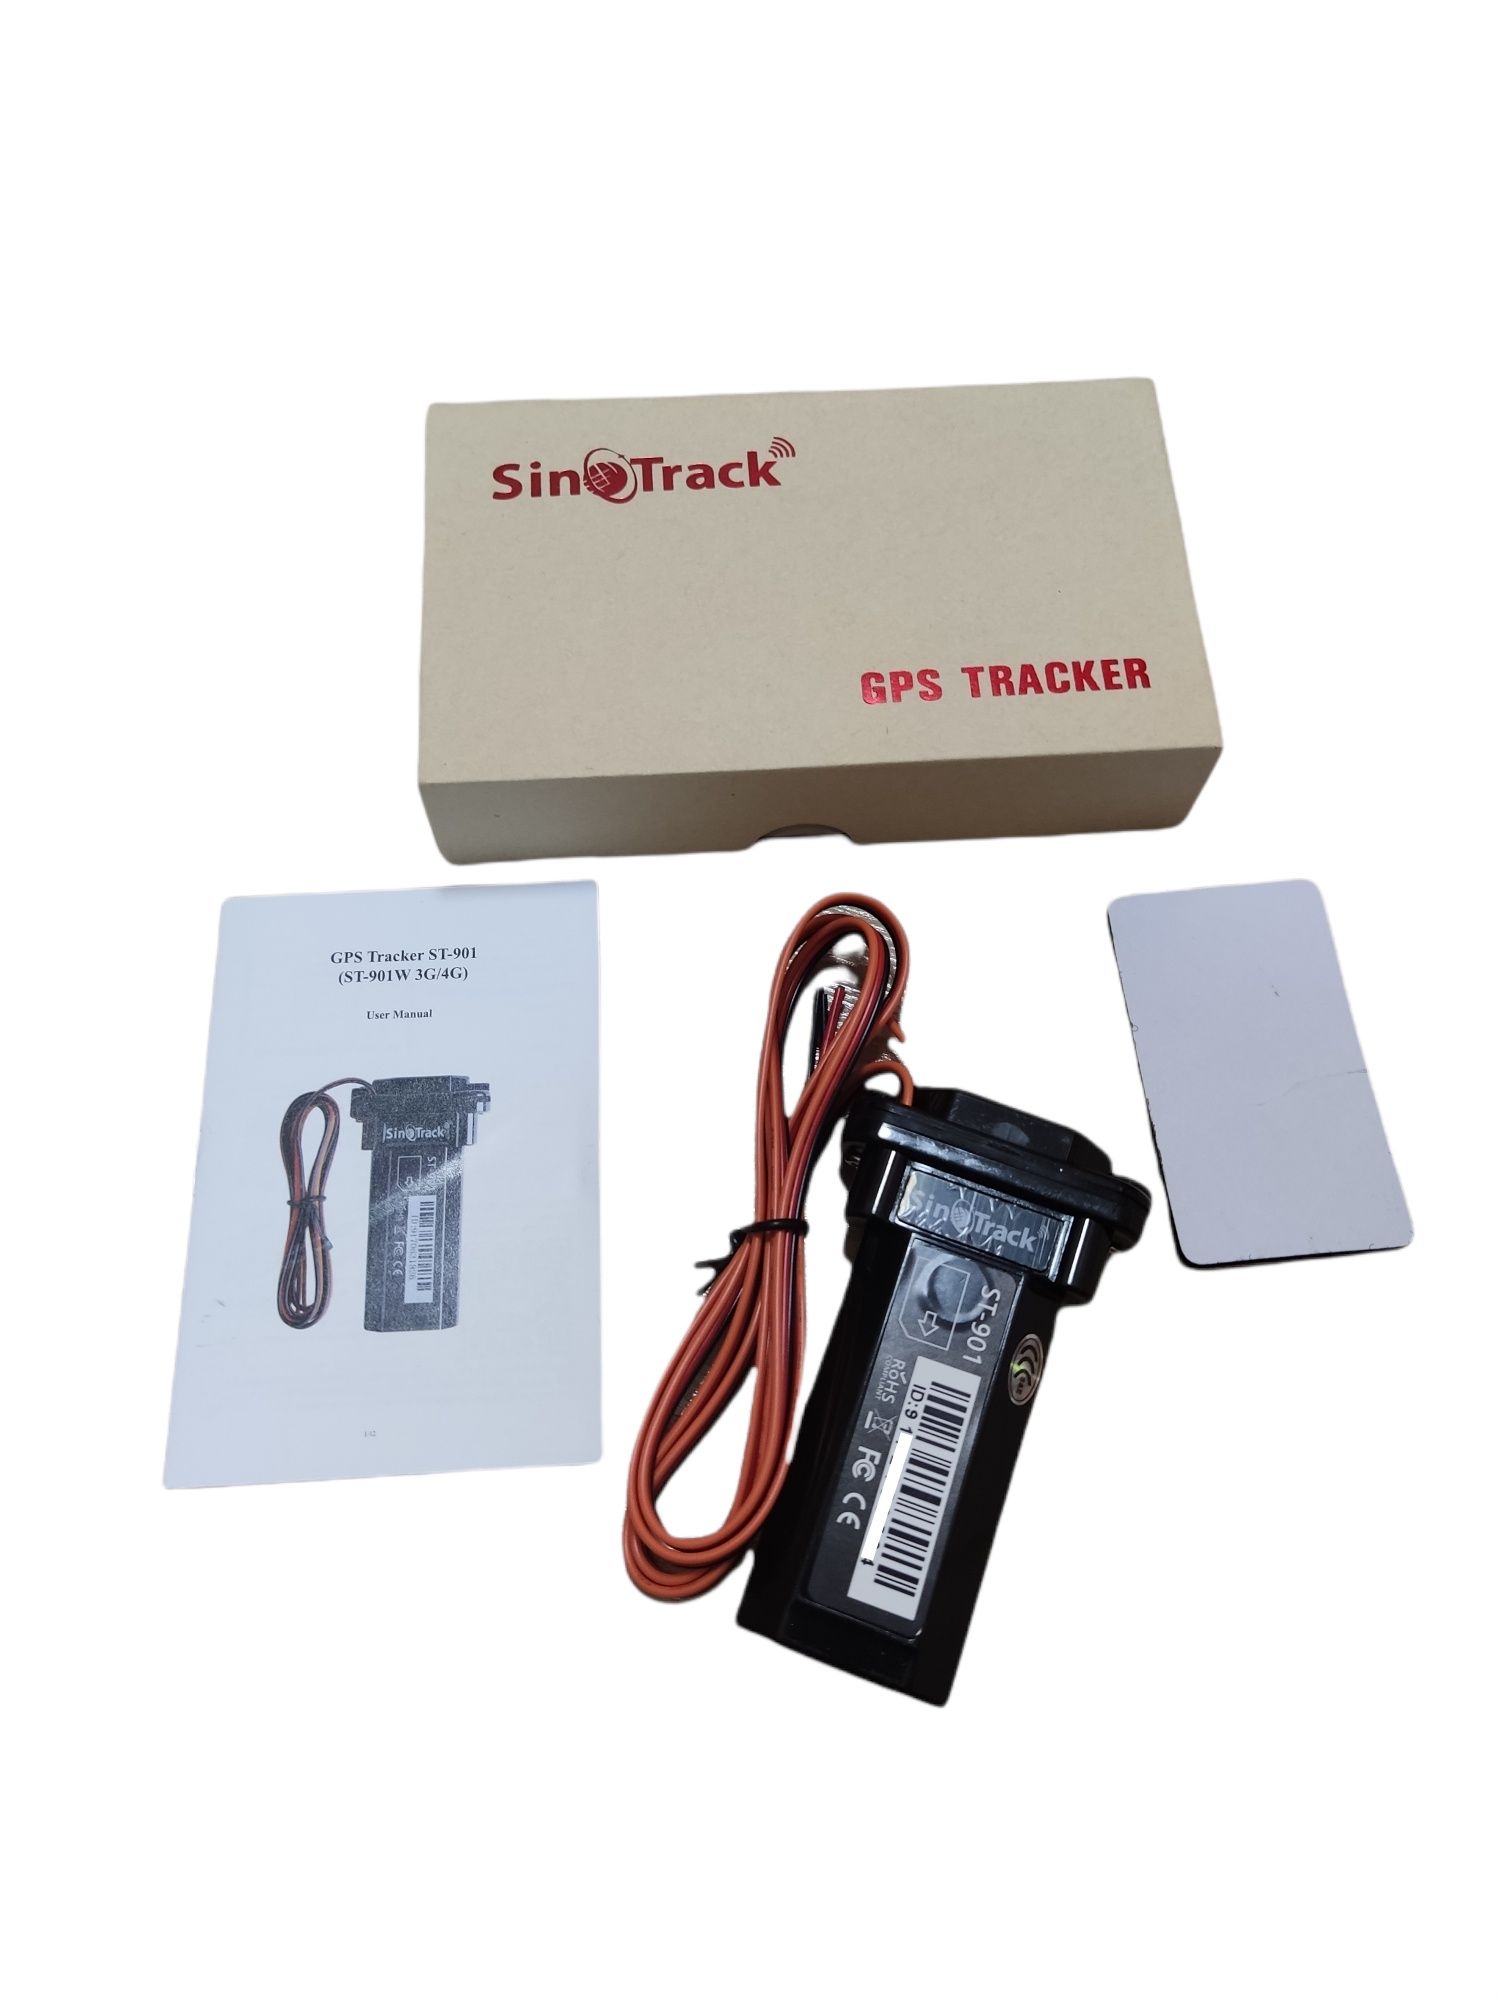 Gps tracker sinotrack st901